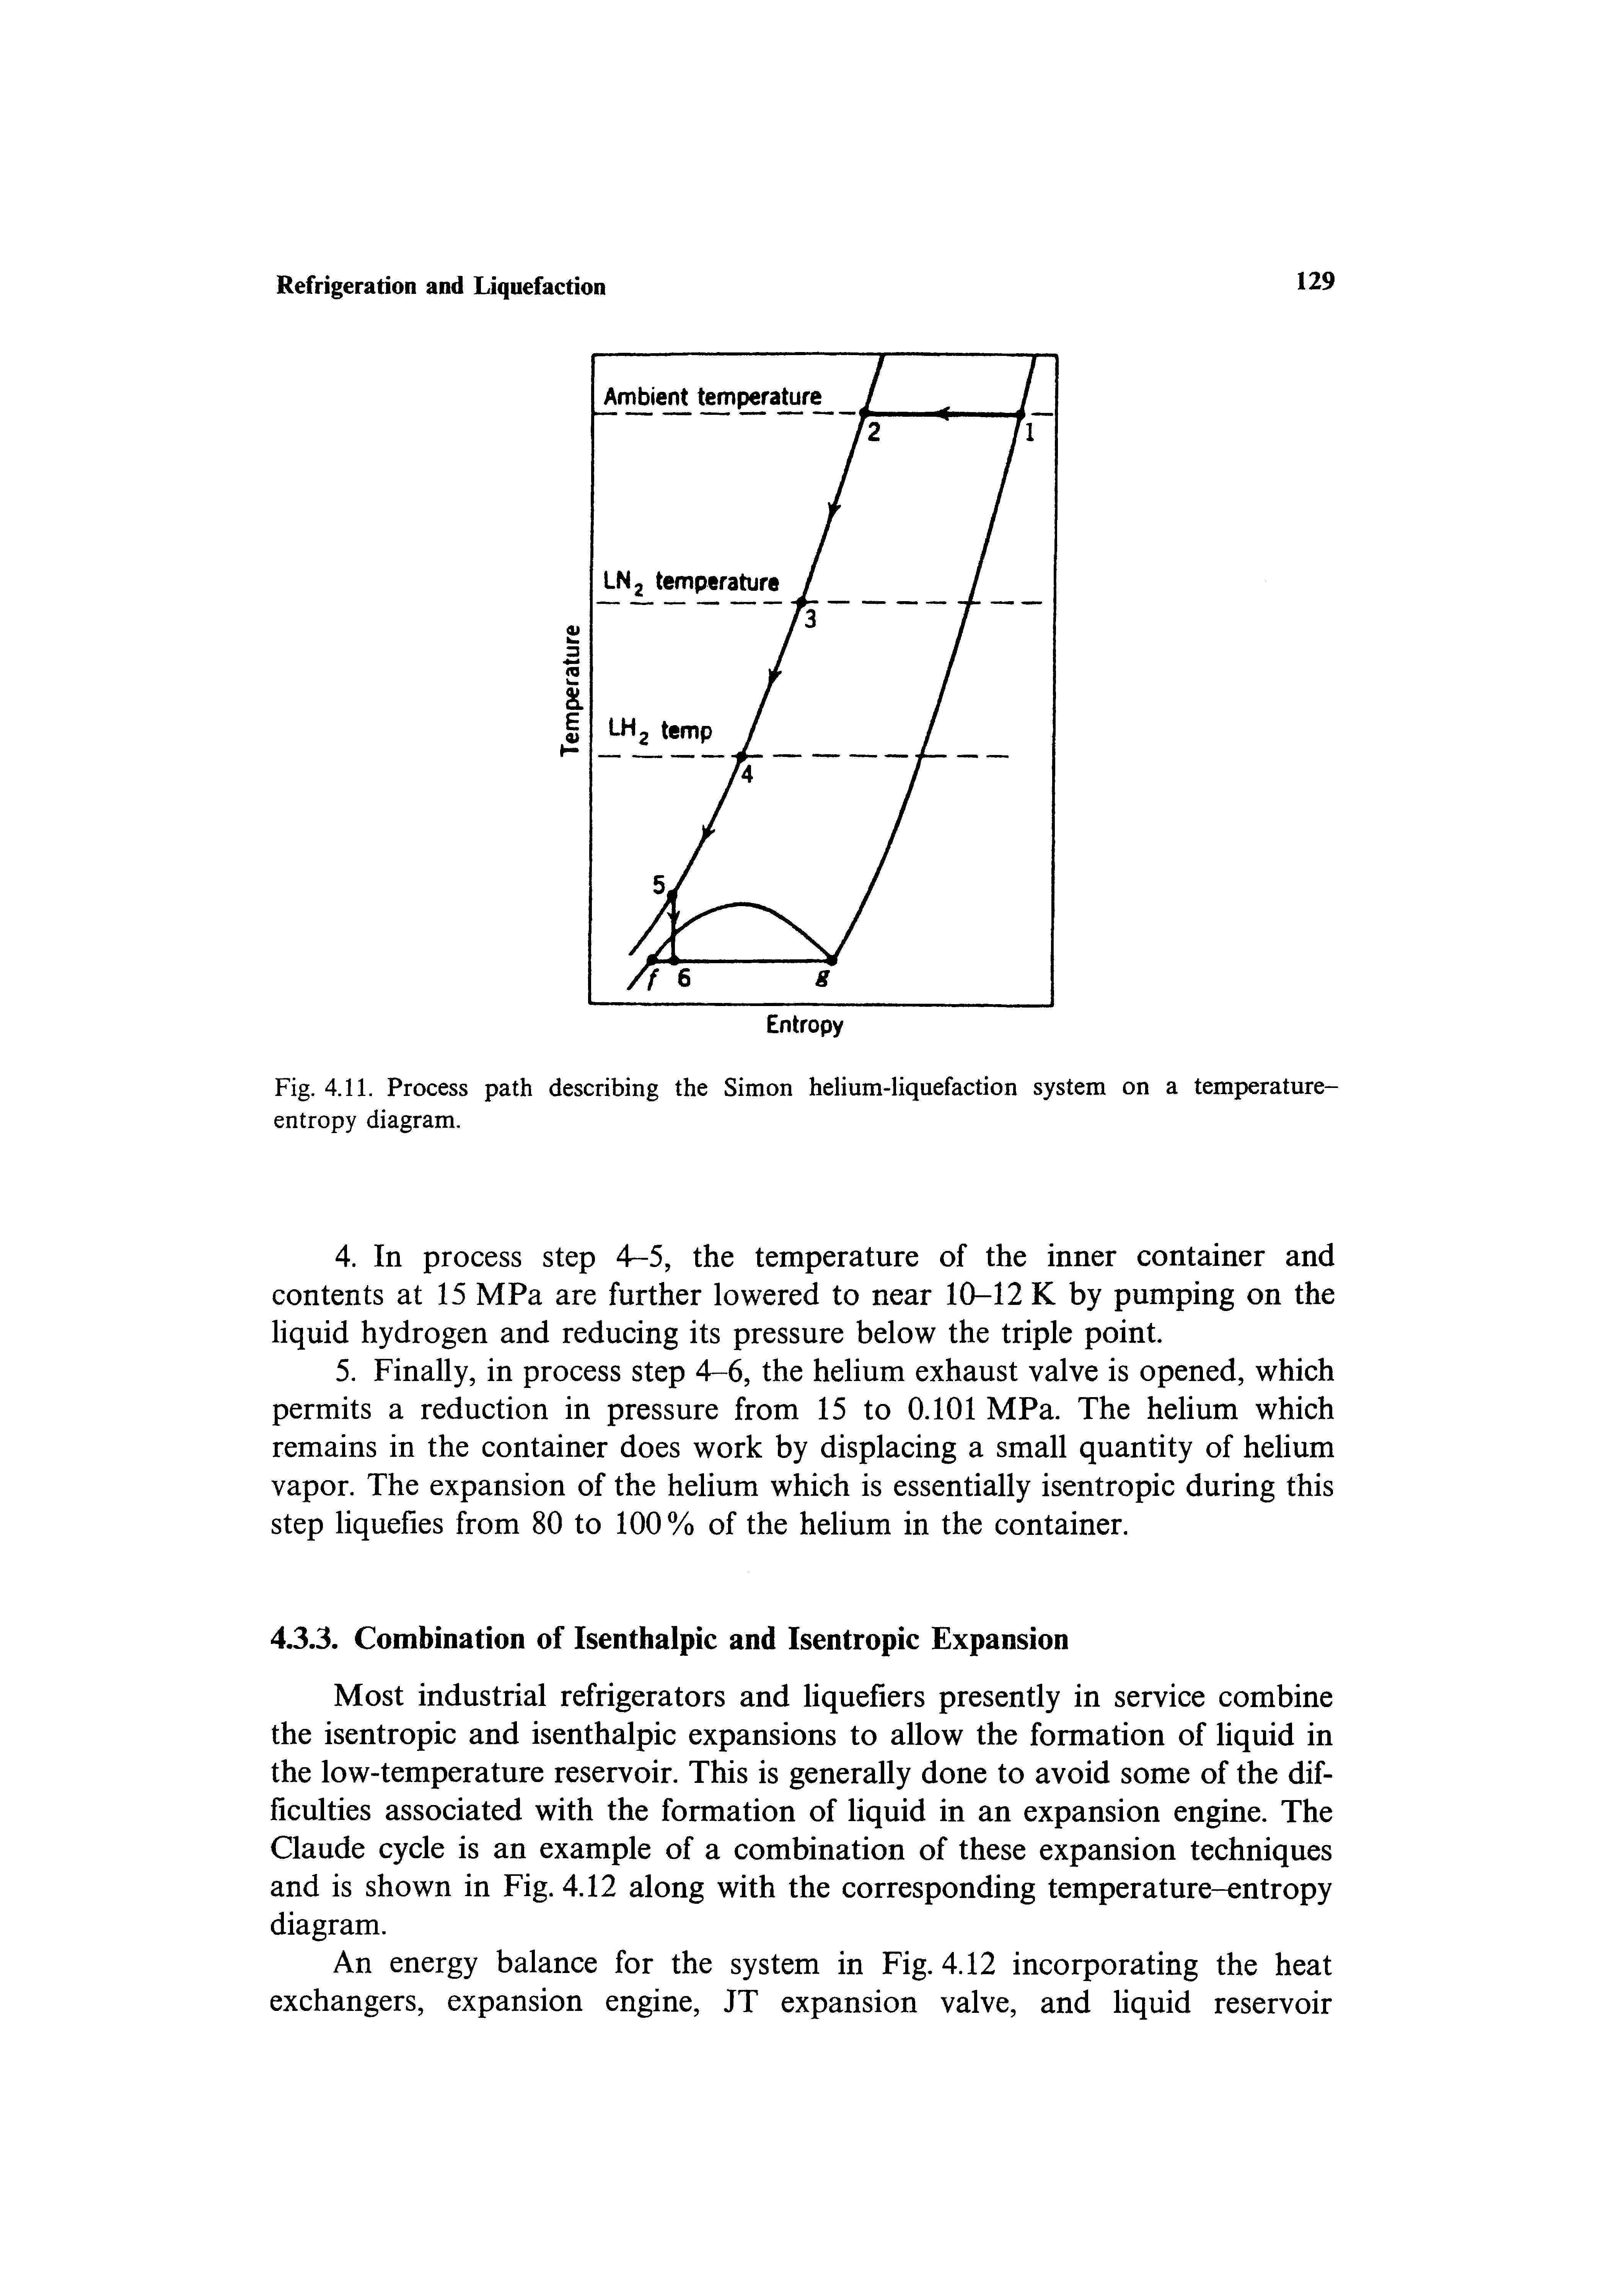 Fig. 4.11. Process path describing the Simon helium-liquefaction system on a temperature-entropy diagram.